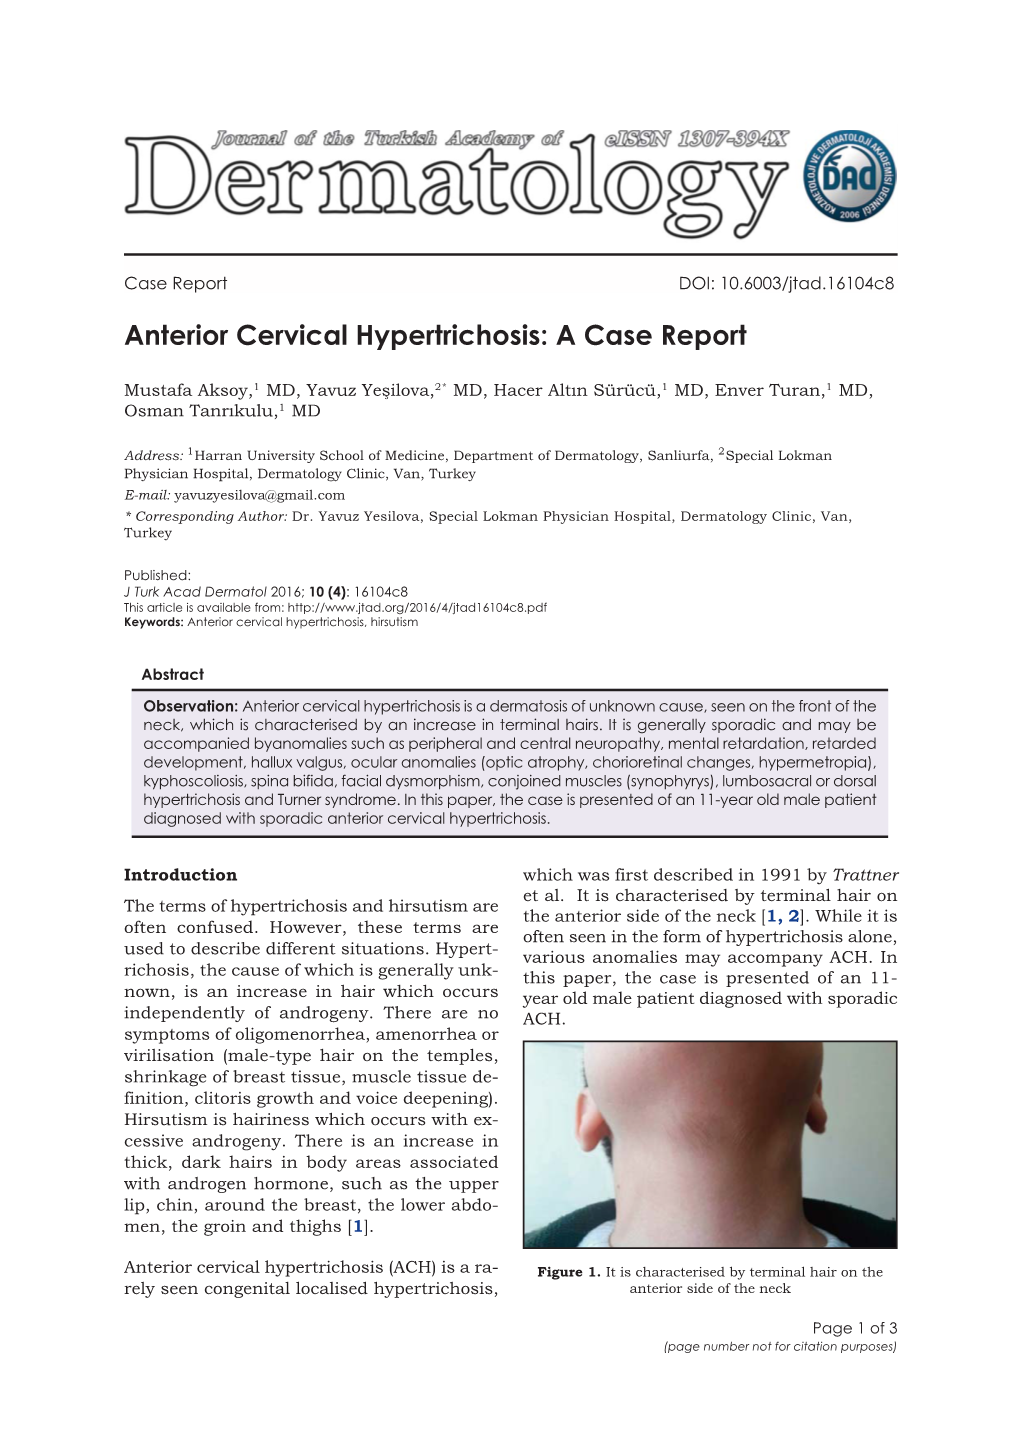 Anterior Cervical Hypertrichosis: a Case Report